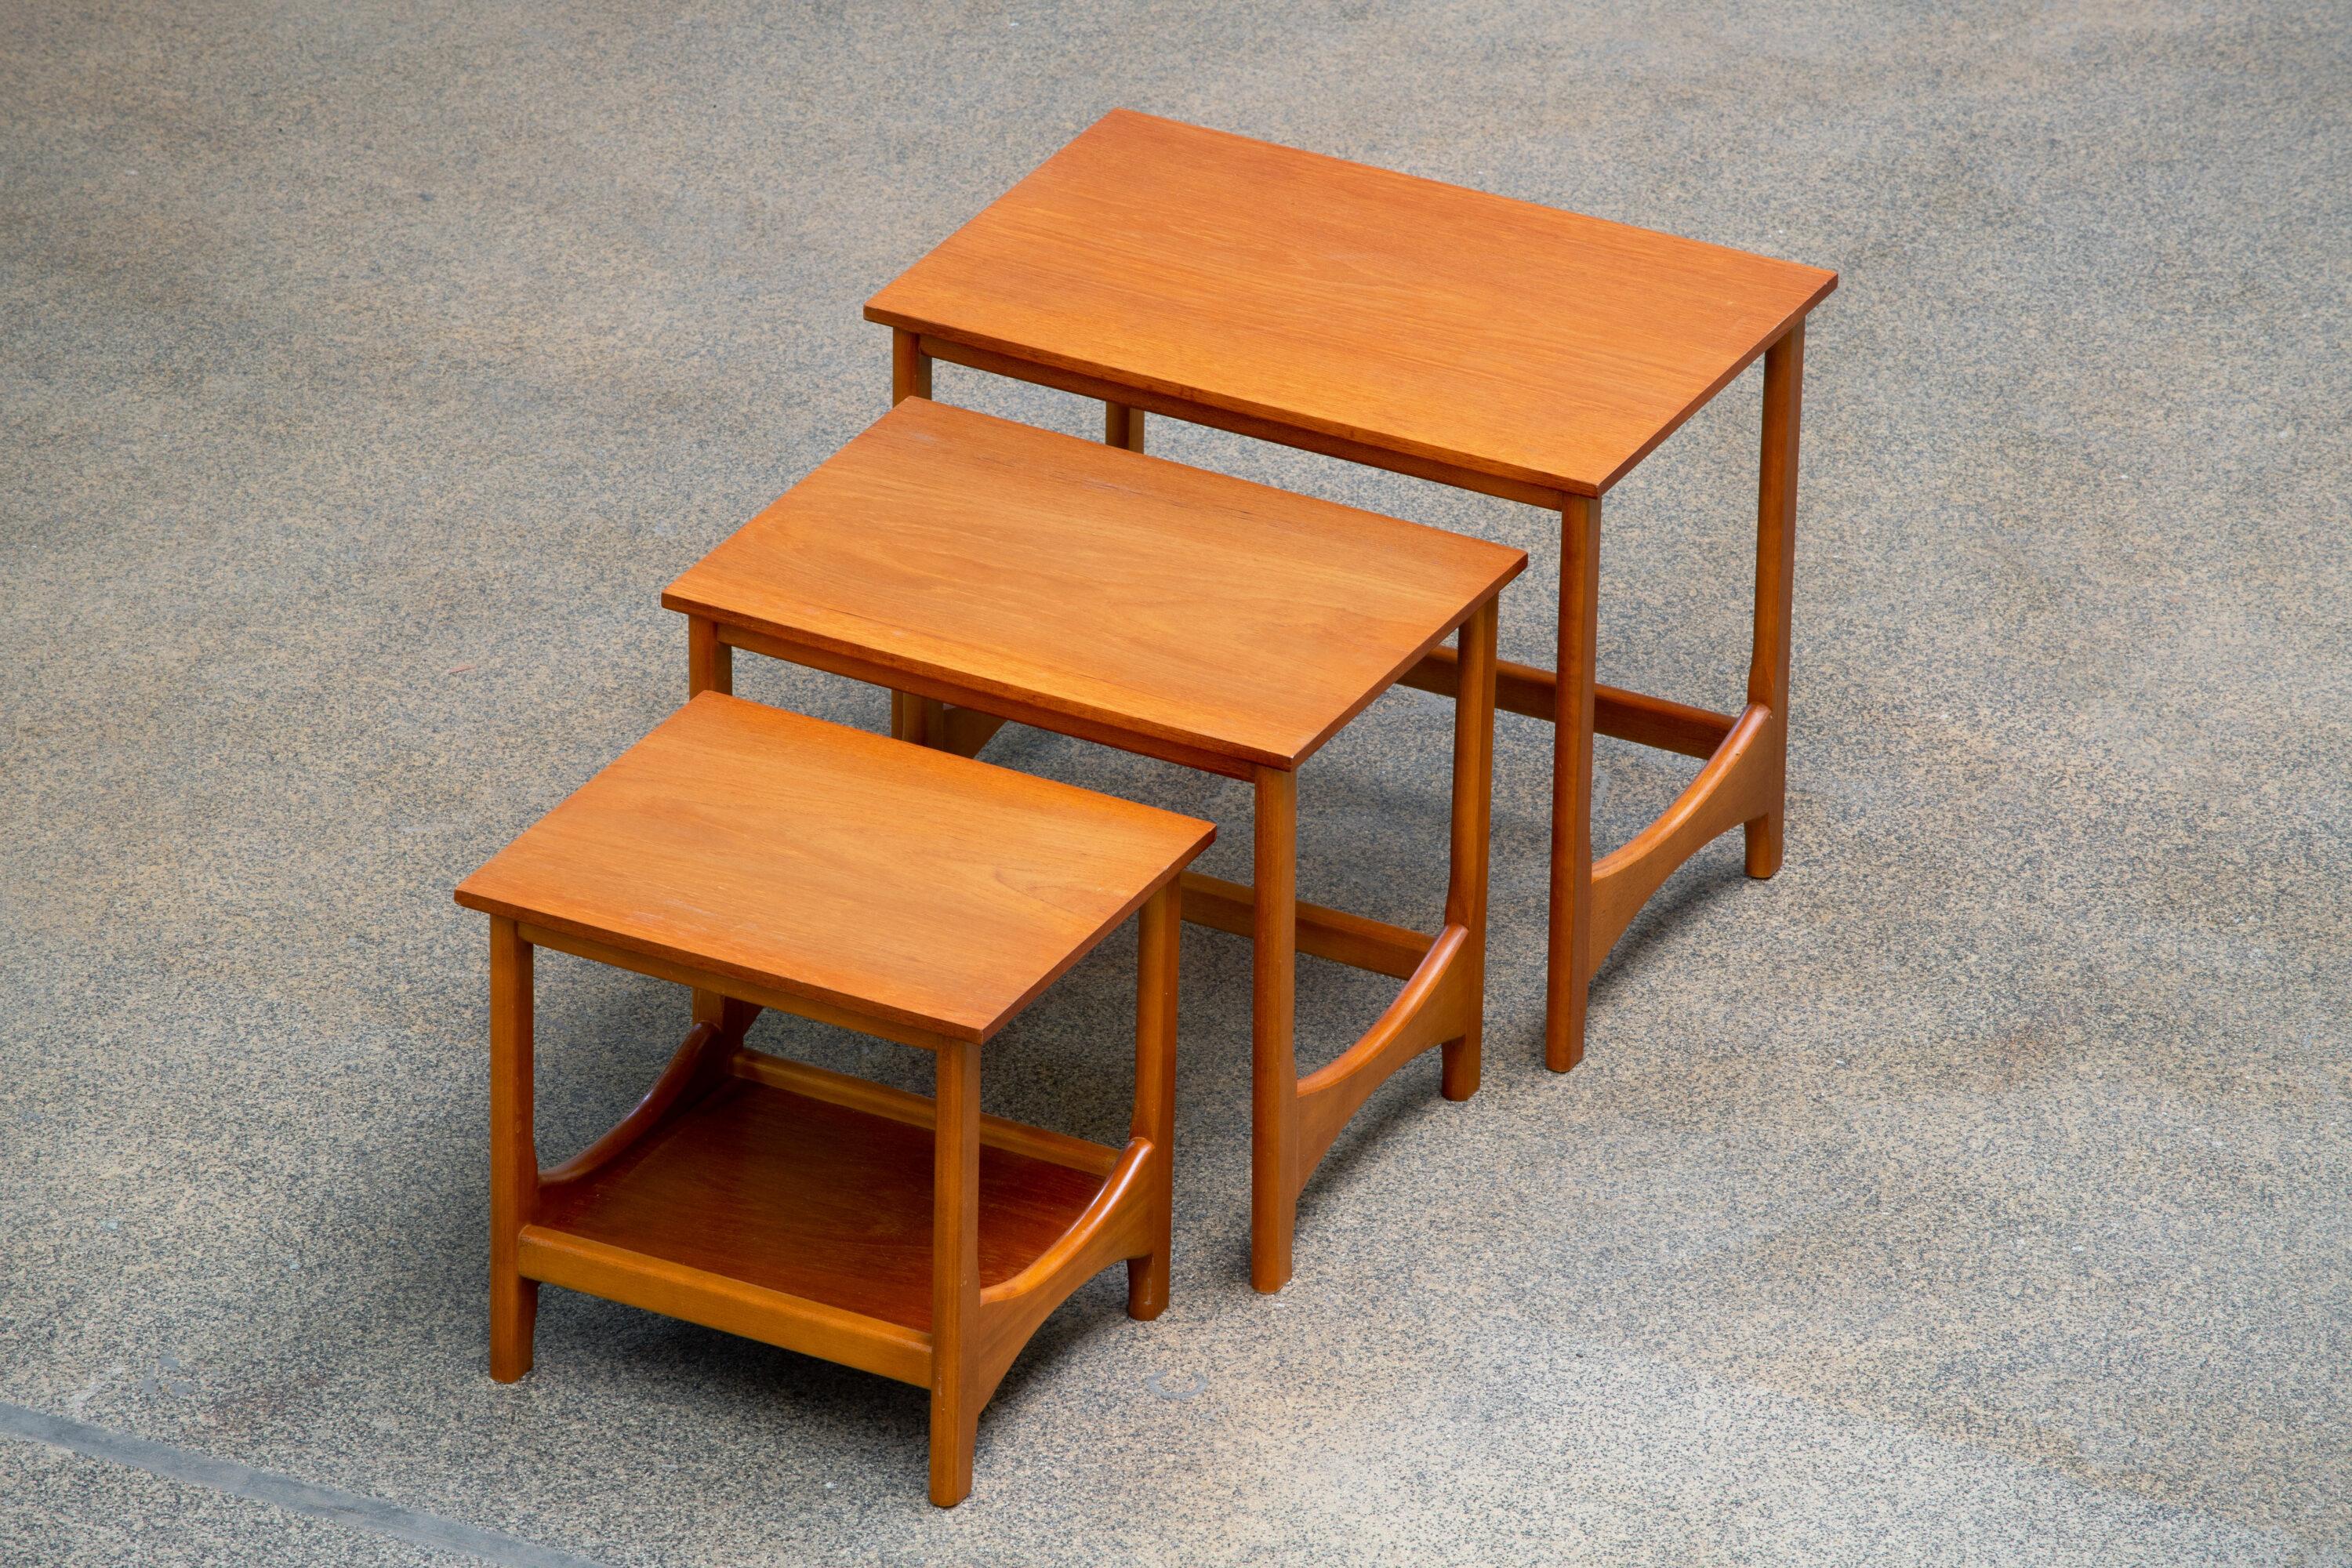 20th Century Teak Midcentury Nesting Tables in Teak, Designed by Nathan, UK, 1960s For Sale